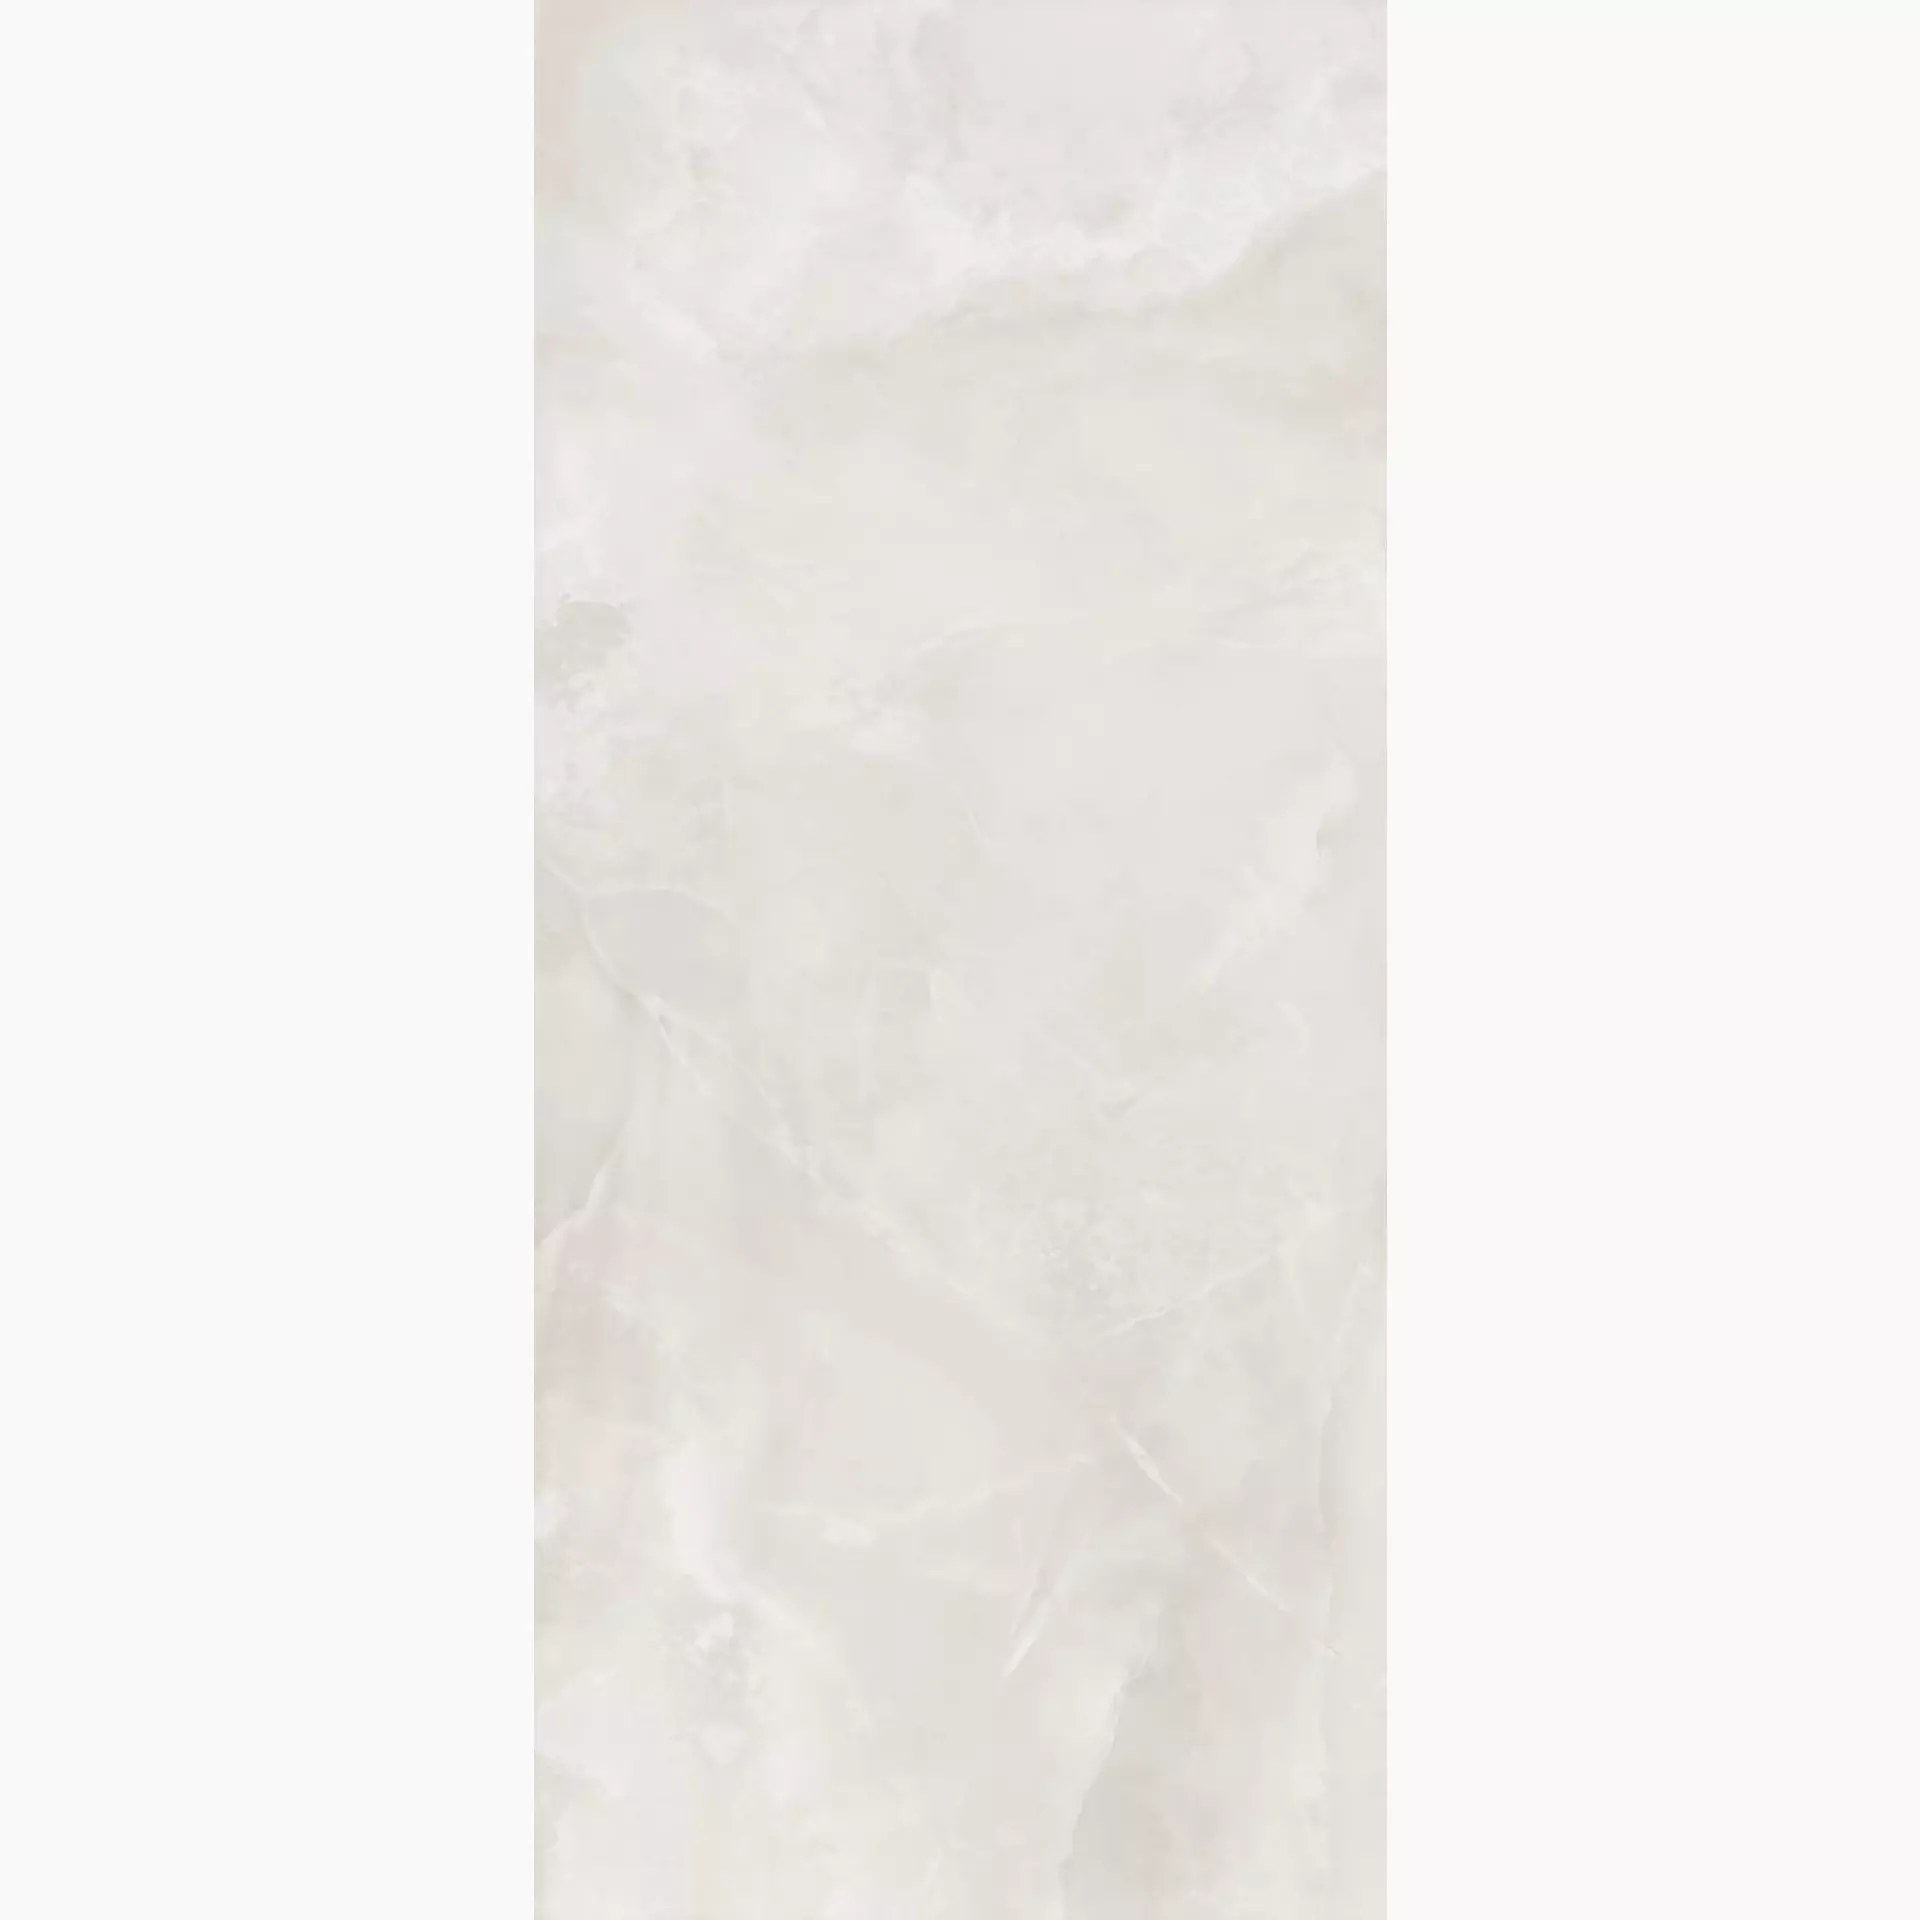 La Faenza Bianco White Natural Flat Matt 166246 90x180cm rectified 10mm - ONICE 9018 RM